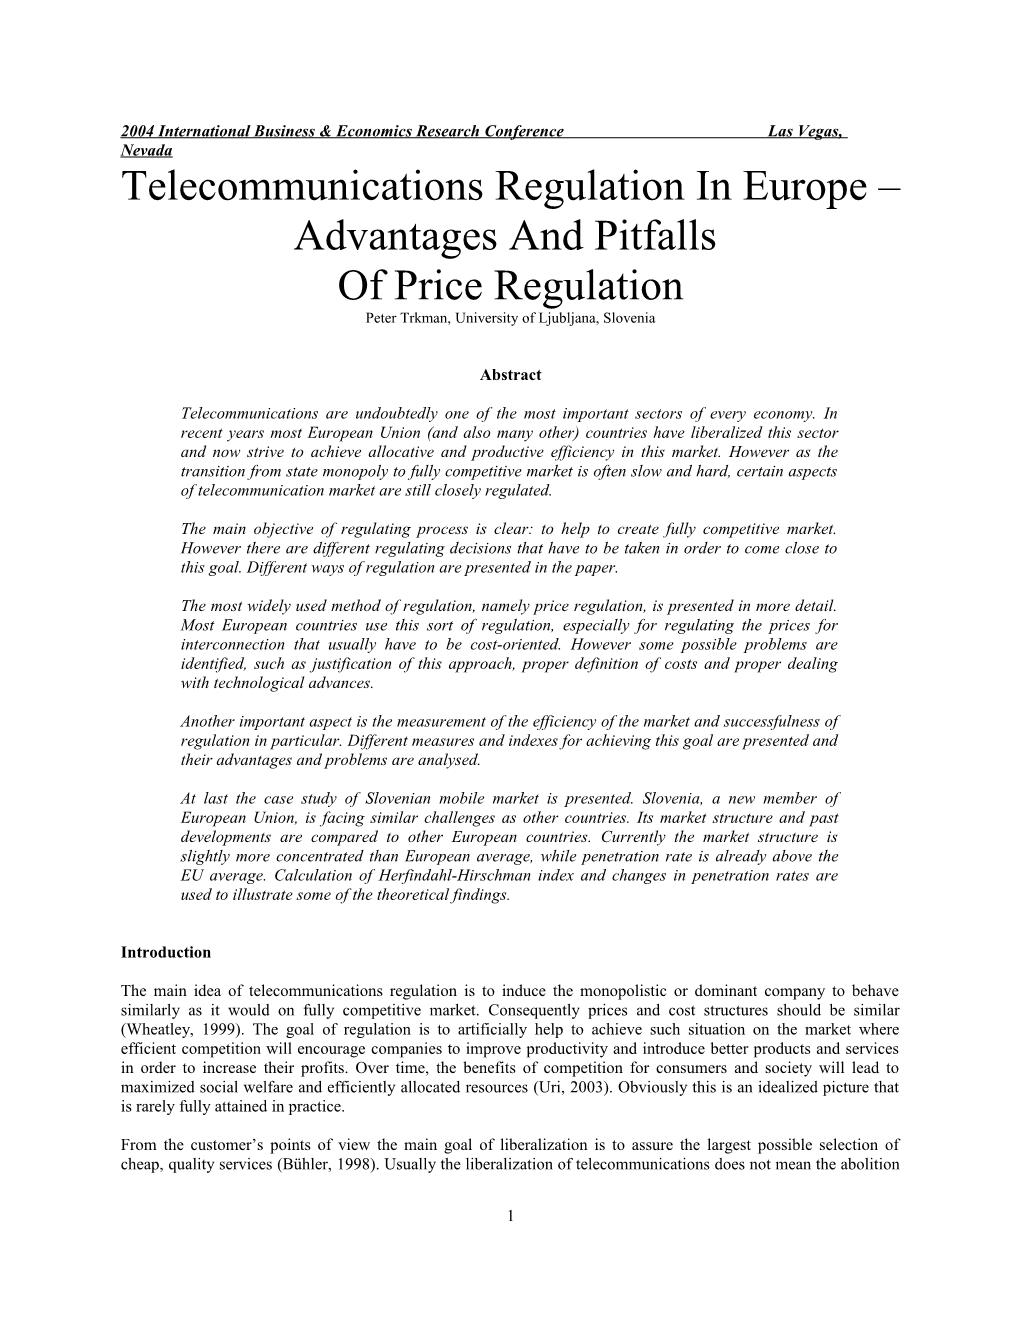 Telecomunications Regulation Advantages and Pitfalls of Price and Profit Regulation